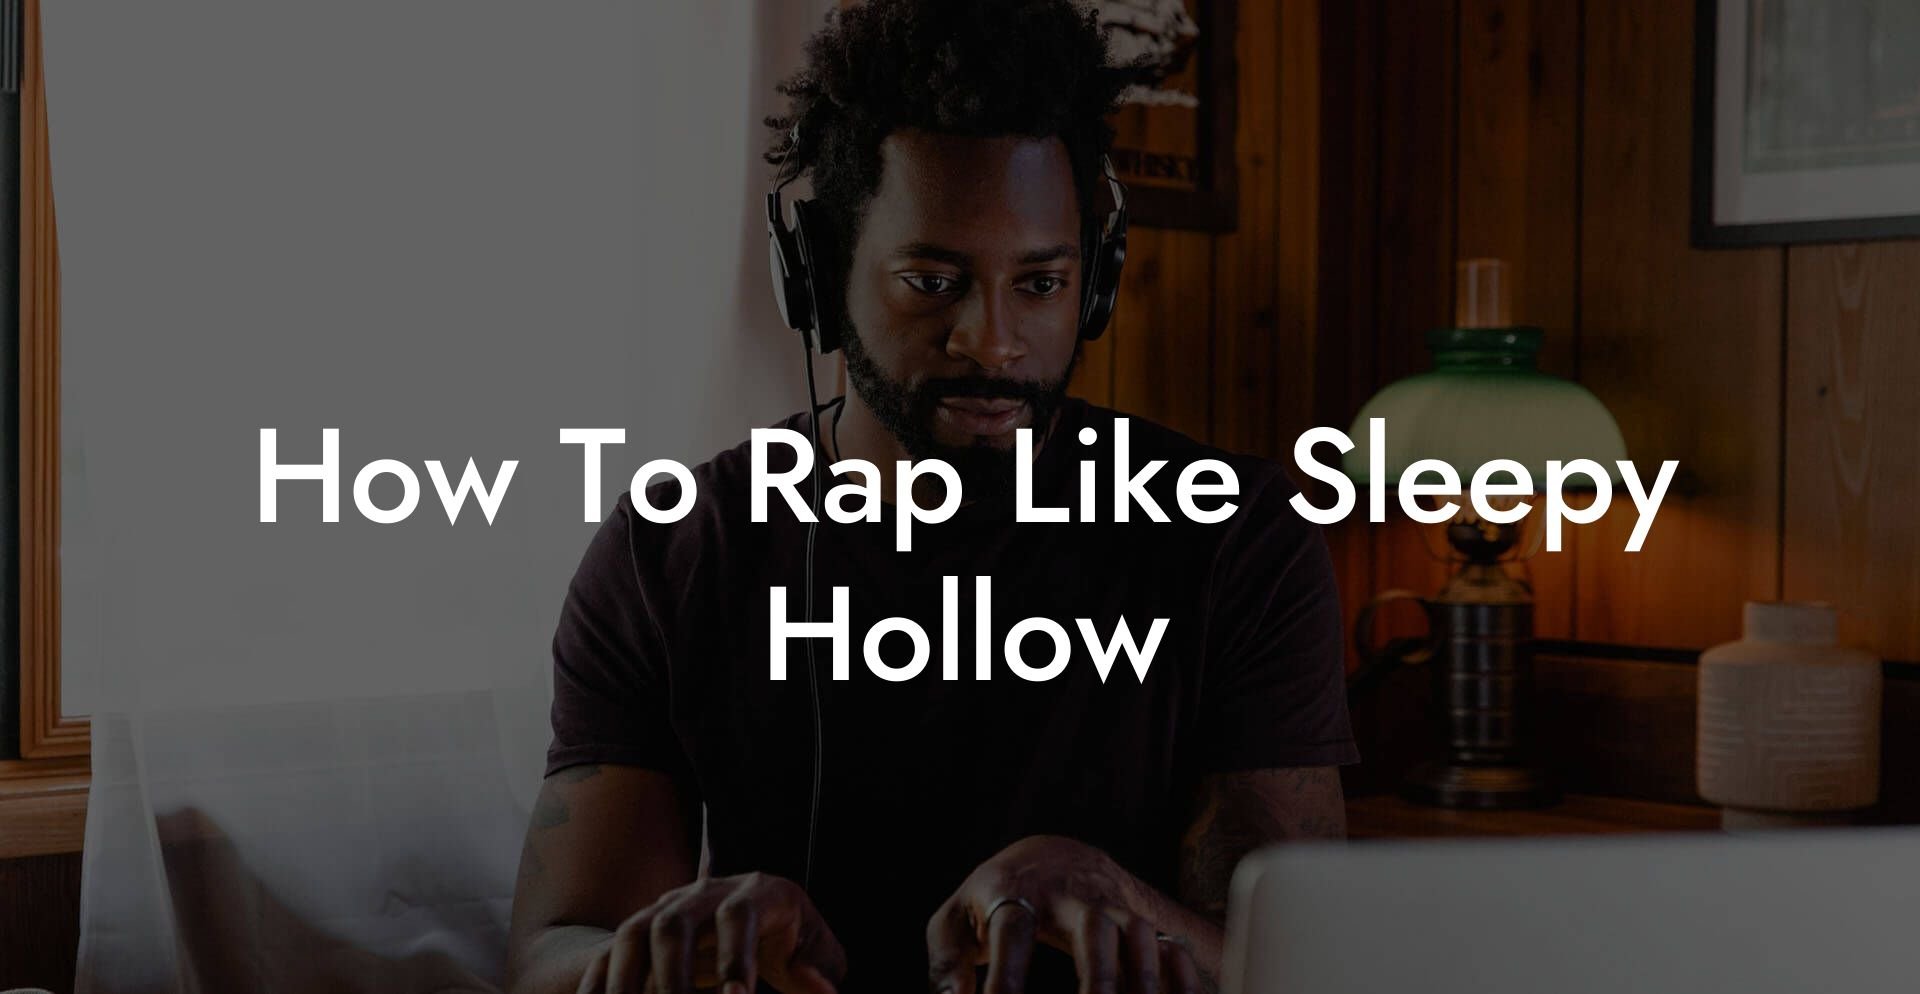 how to rap like sleepy hollow lyric assistant